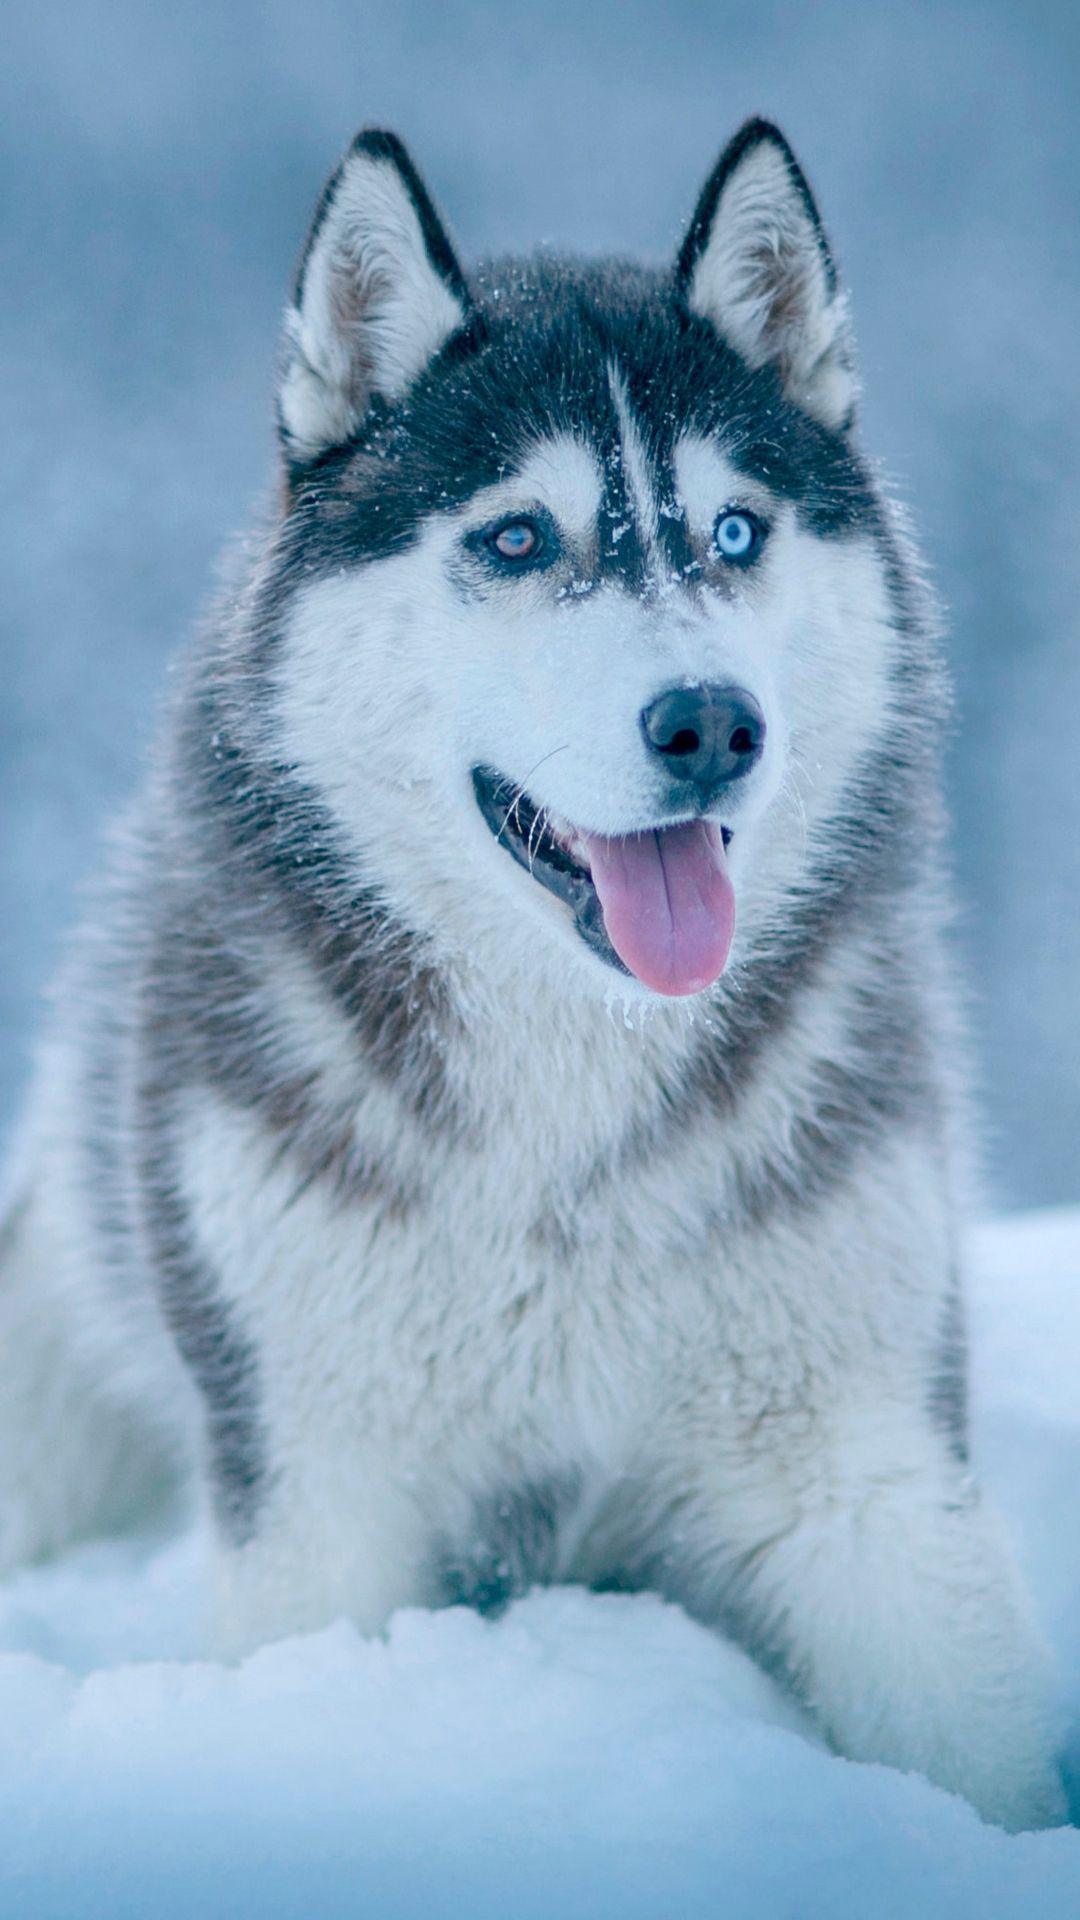 husky #snow #dog #animals #wallpaper #lockscreen #mobile #android #ios #infinitywallpaper. Dog breeds, Husky dogs, Dog wallpaper